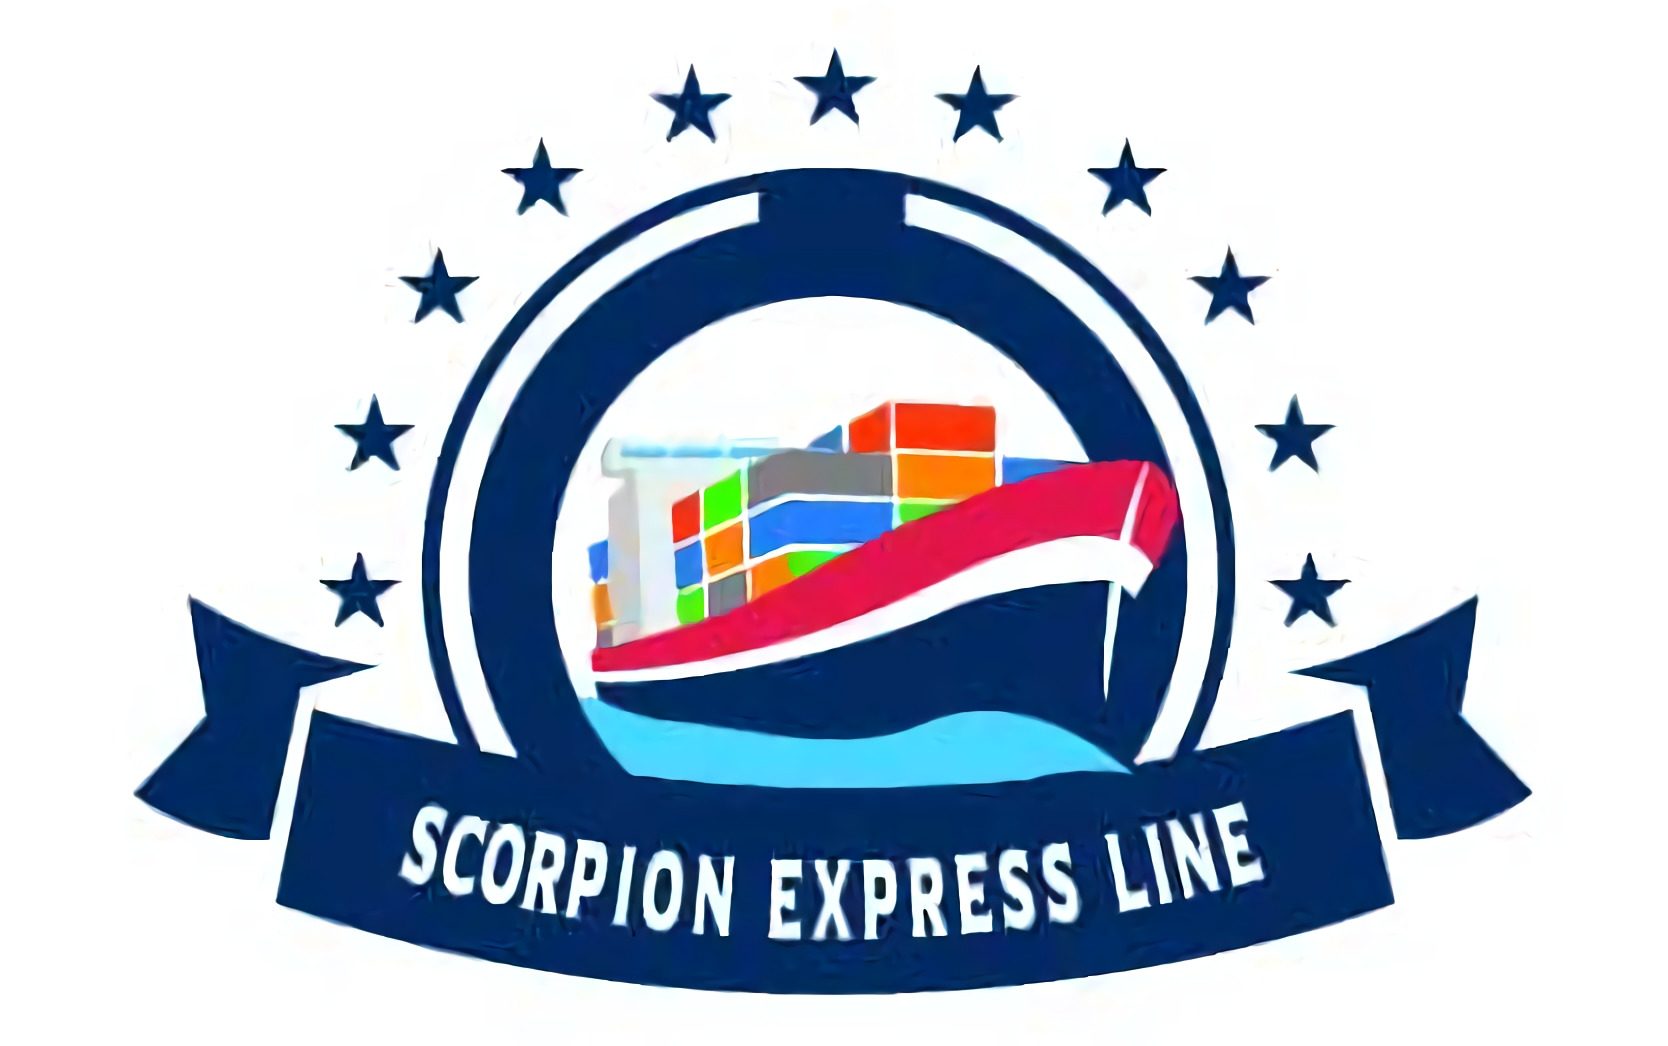 Scorpion Express Line